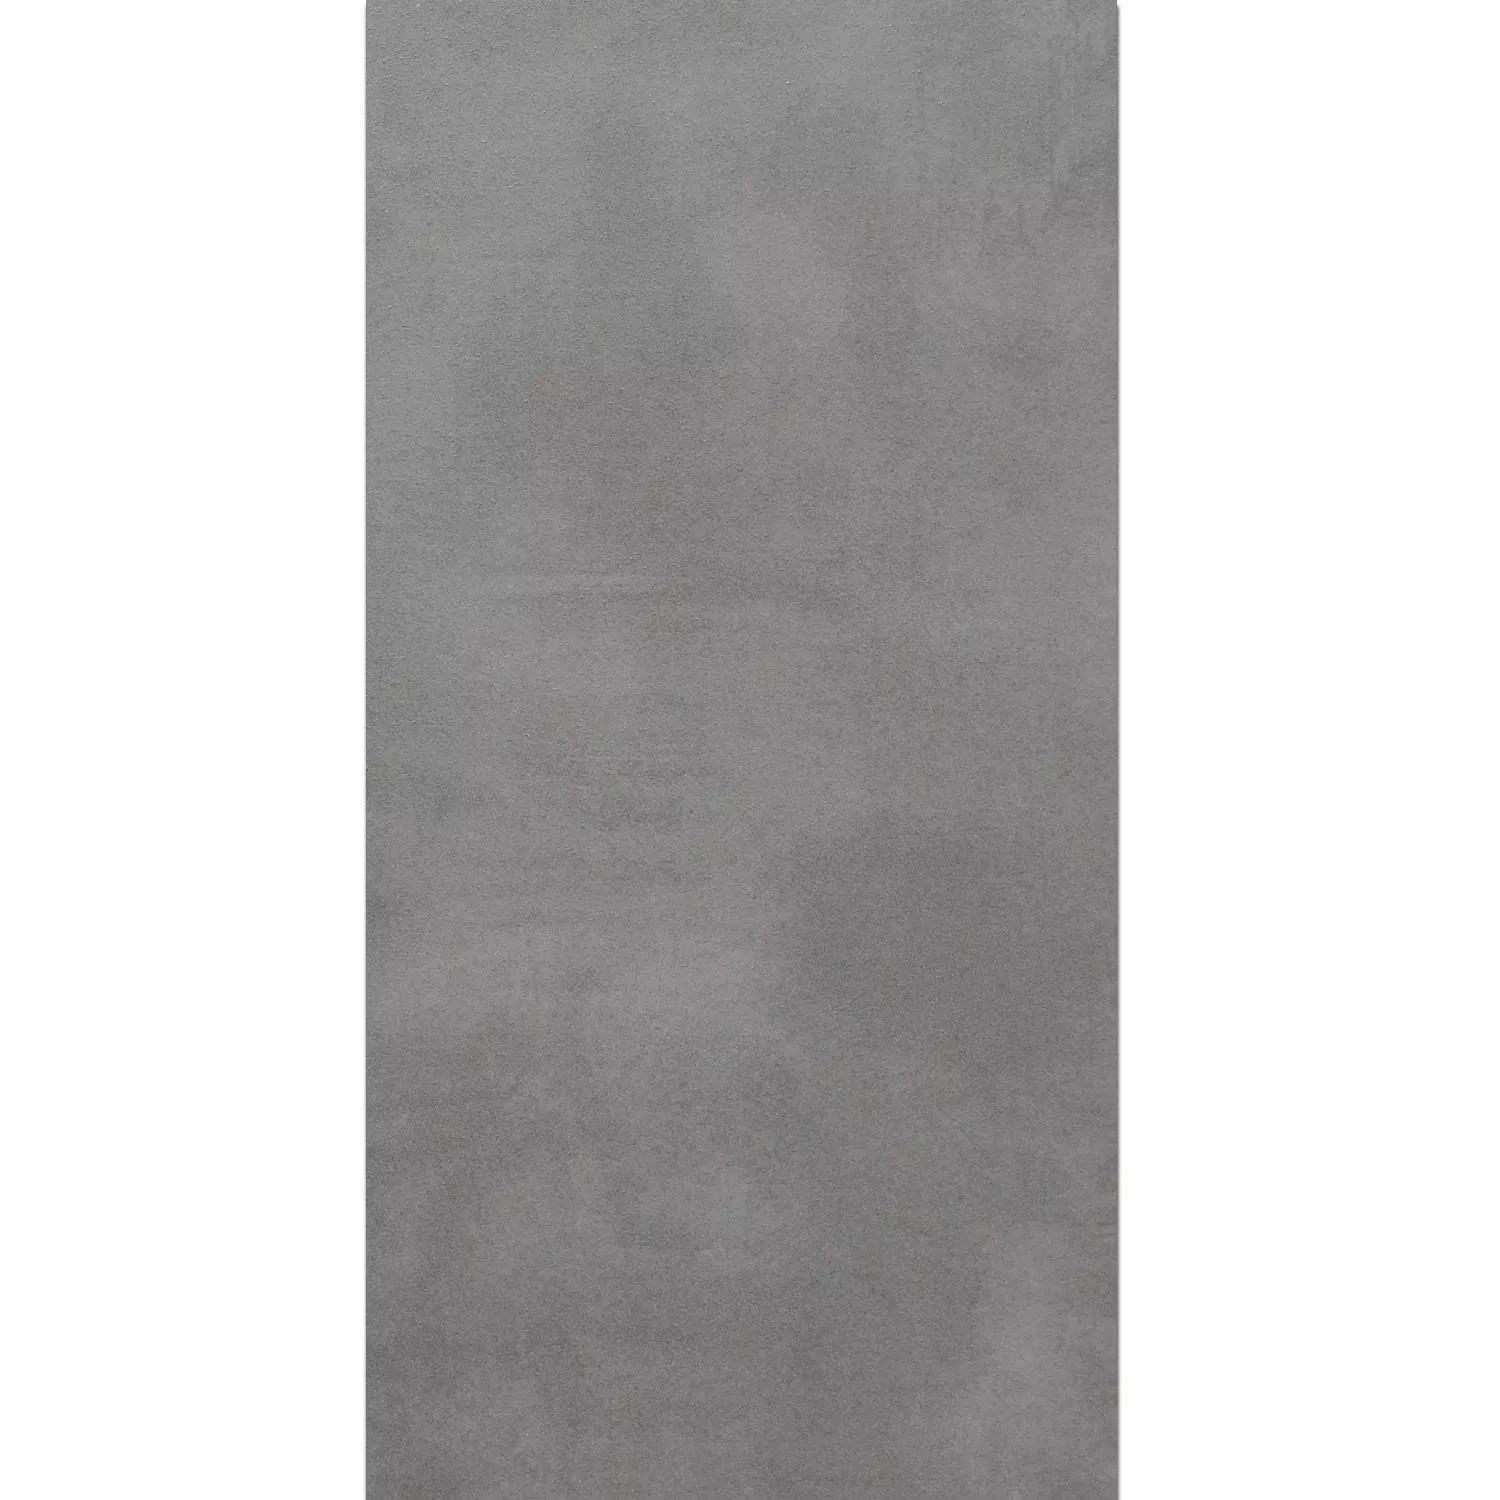 Sample Terrastegels Zeus Beton Optic Grey 60x90cm